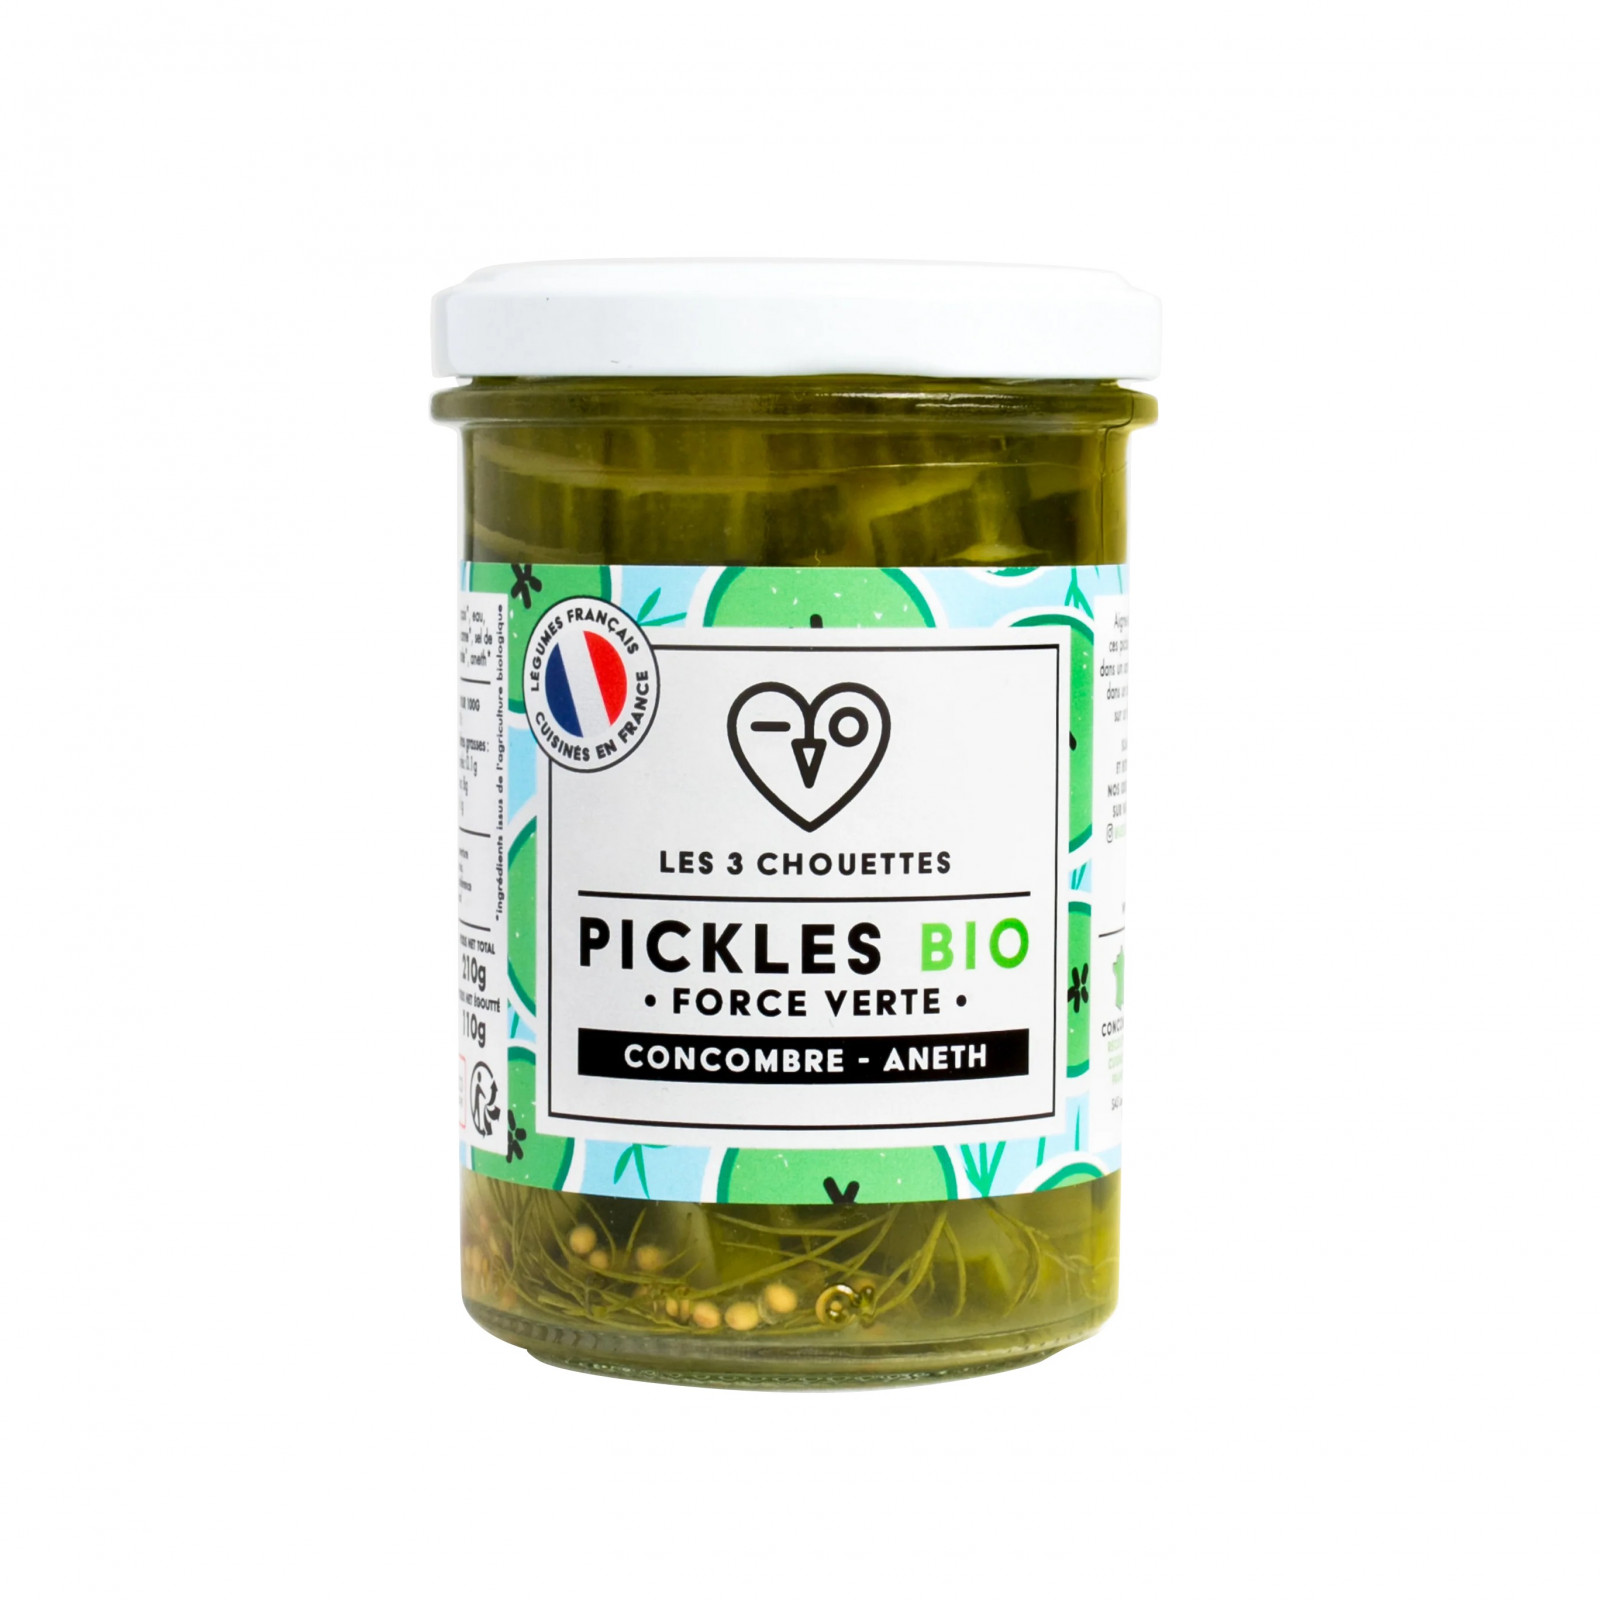 Pickles concombre aneth